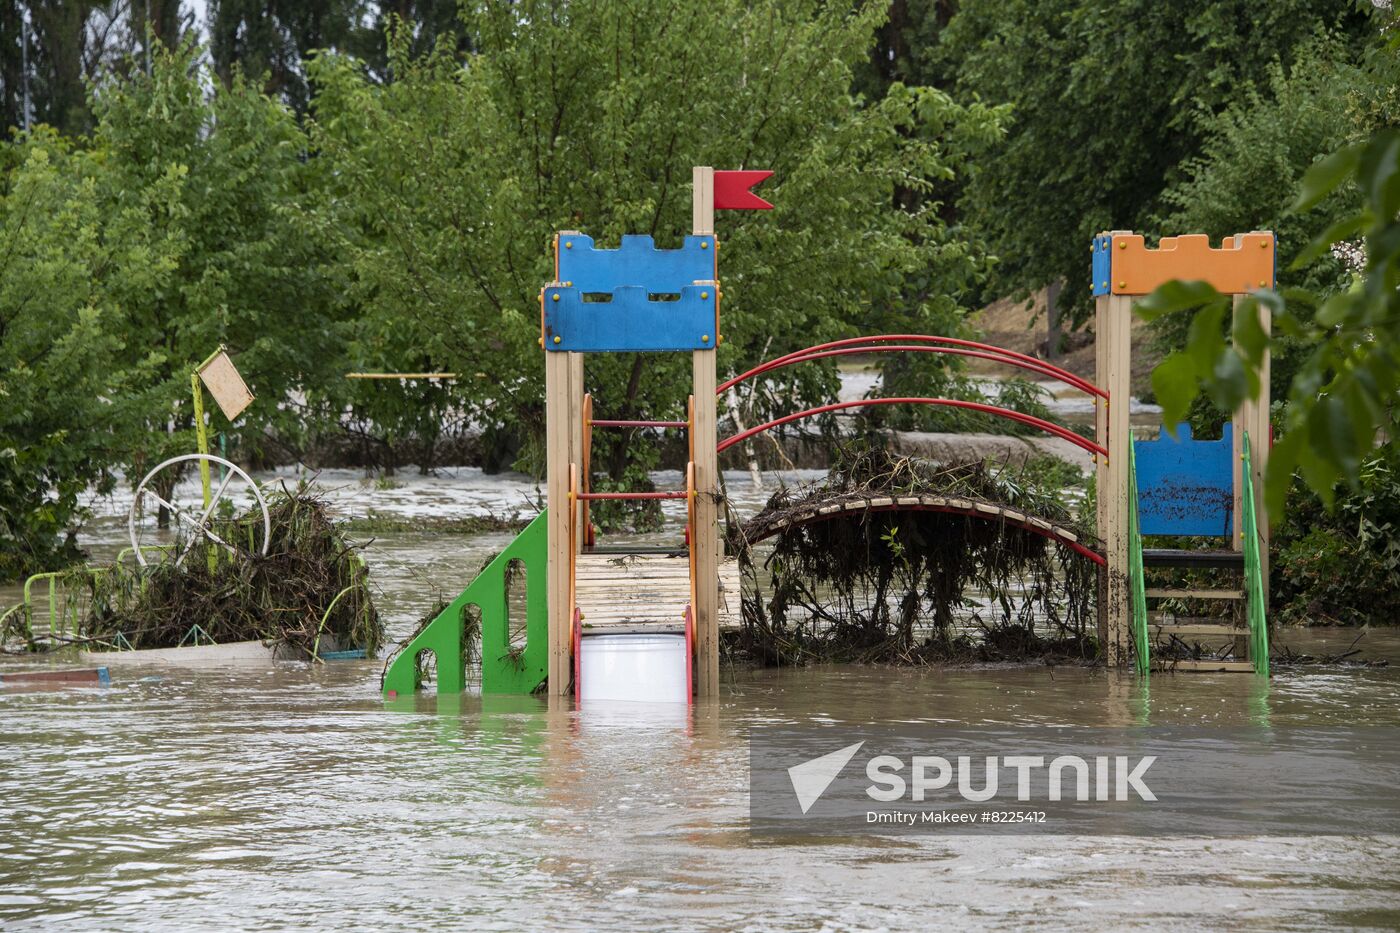 Russia Crimea Floods 